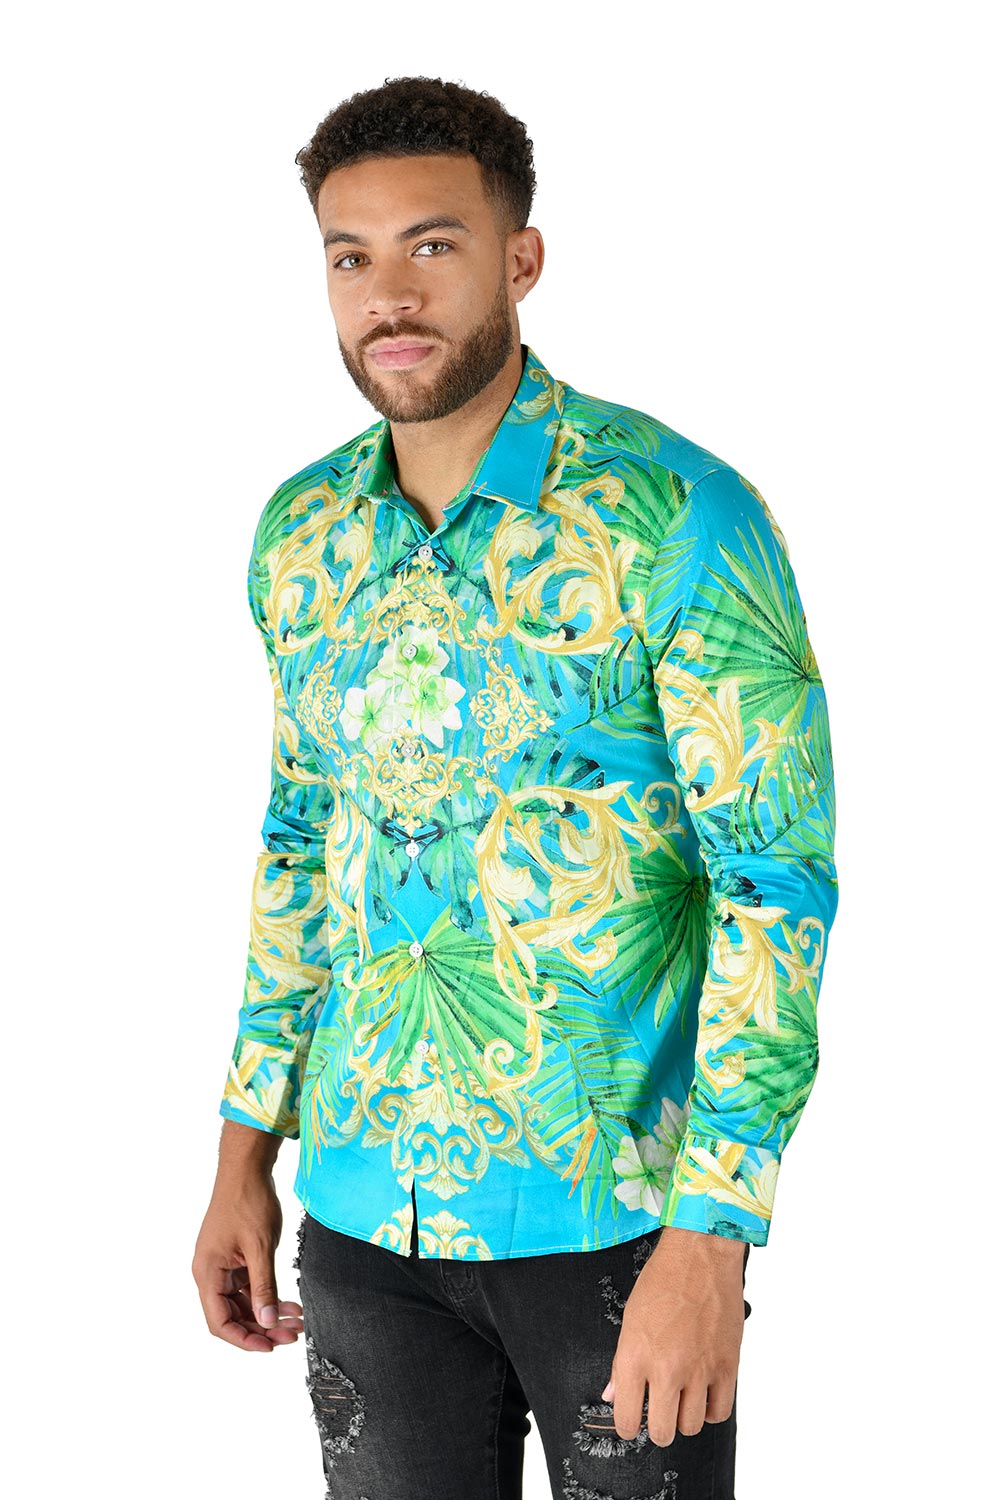 BARABAS Men's Printed Floral Leaf Long Sleeve Button Down Shirts SP226 teal 